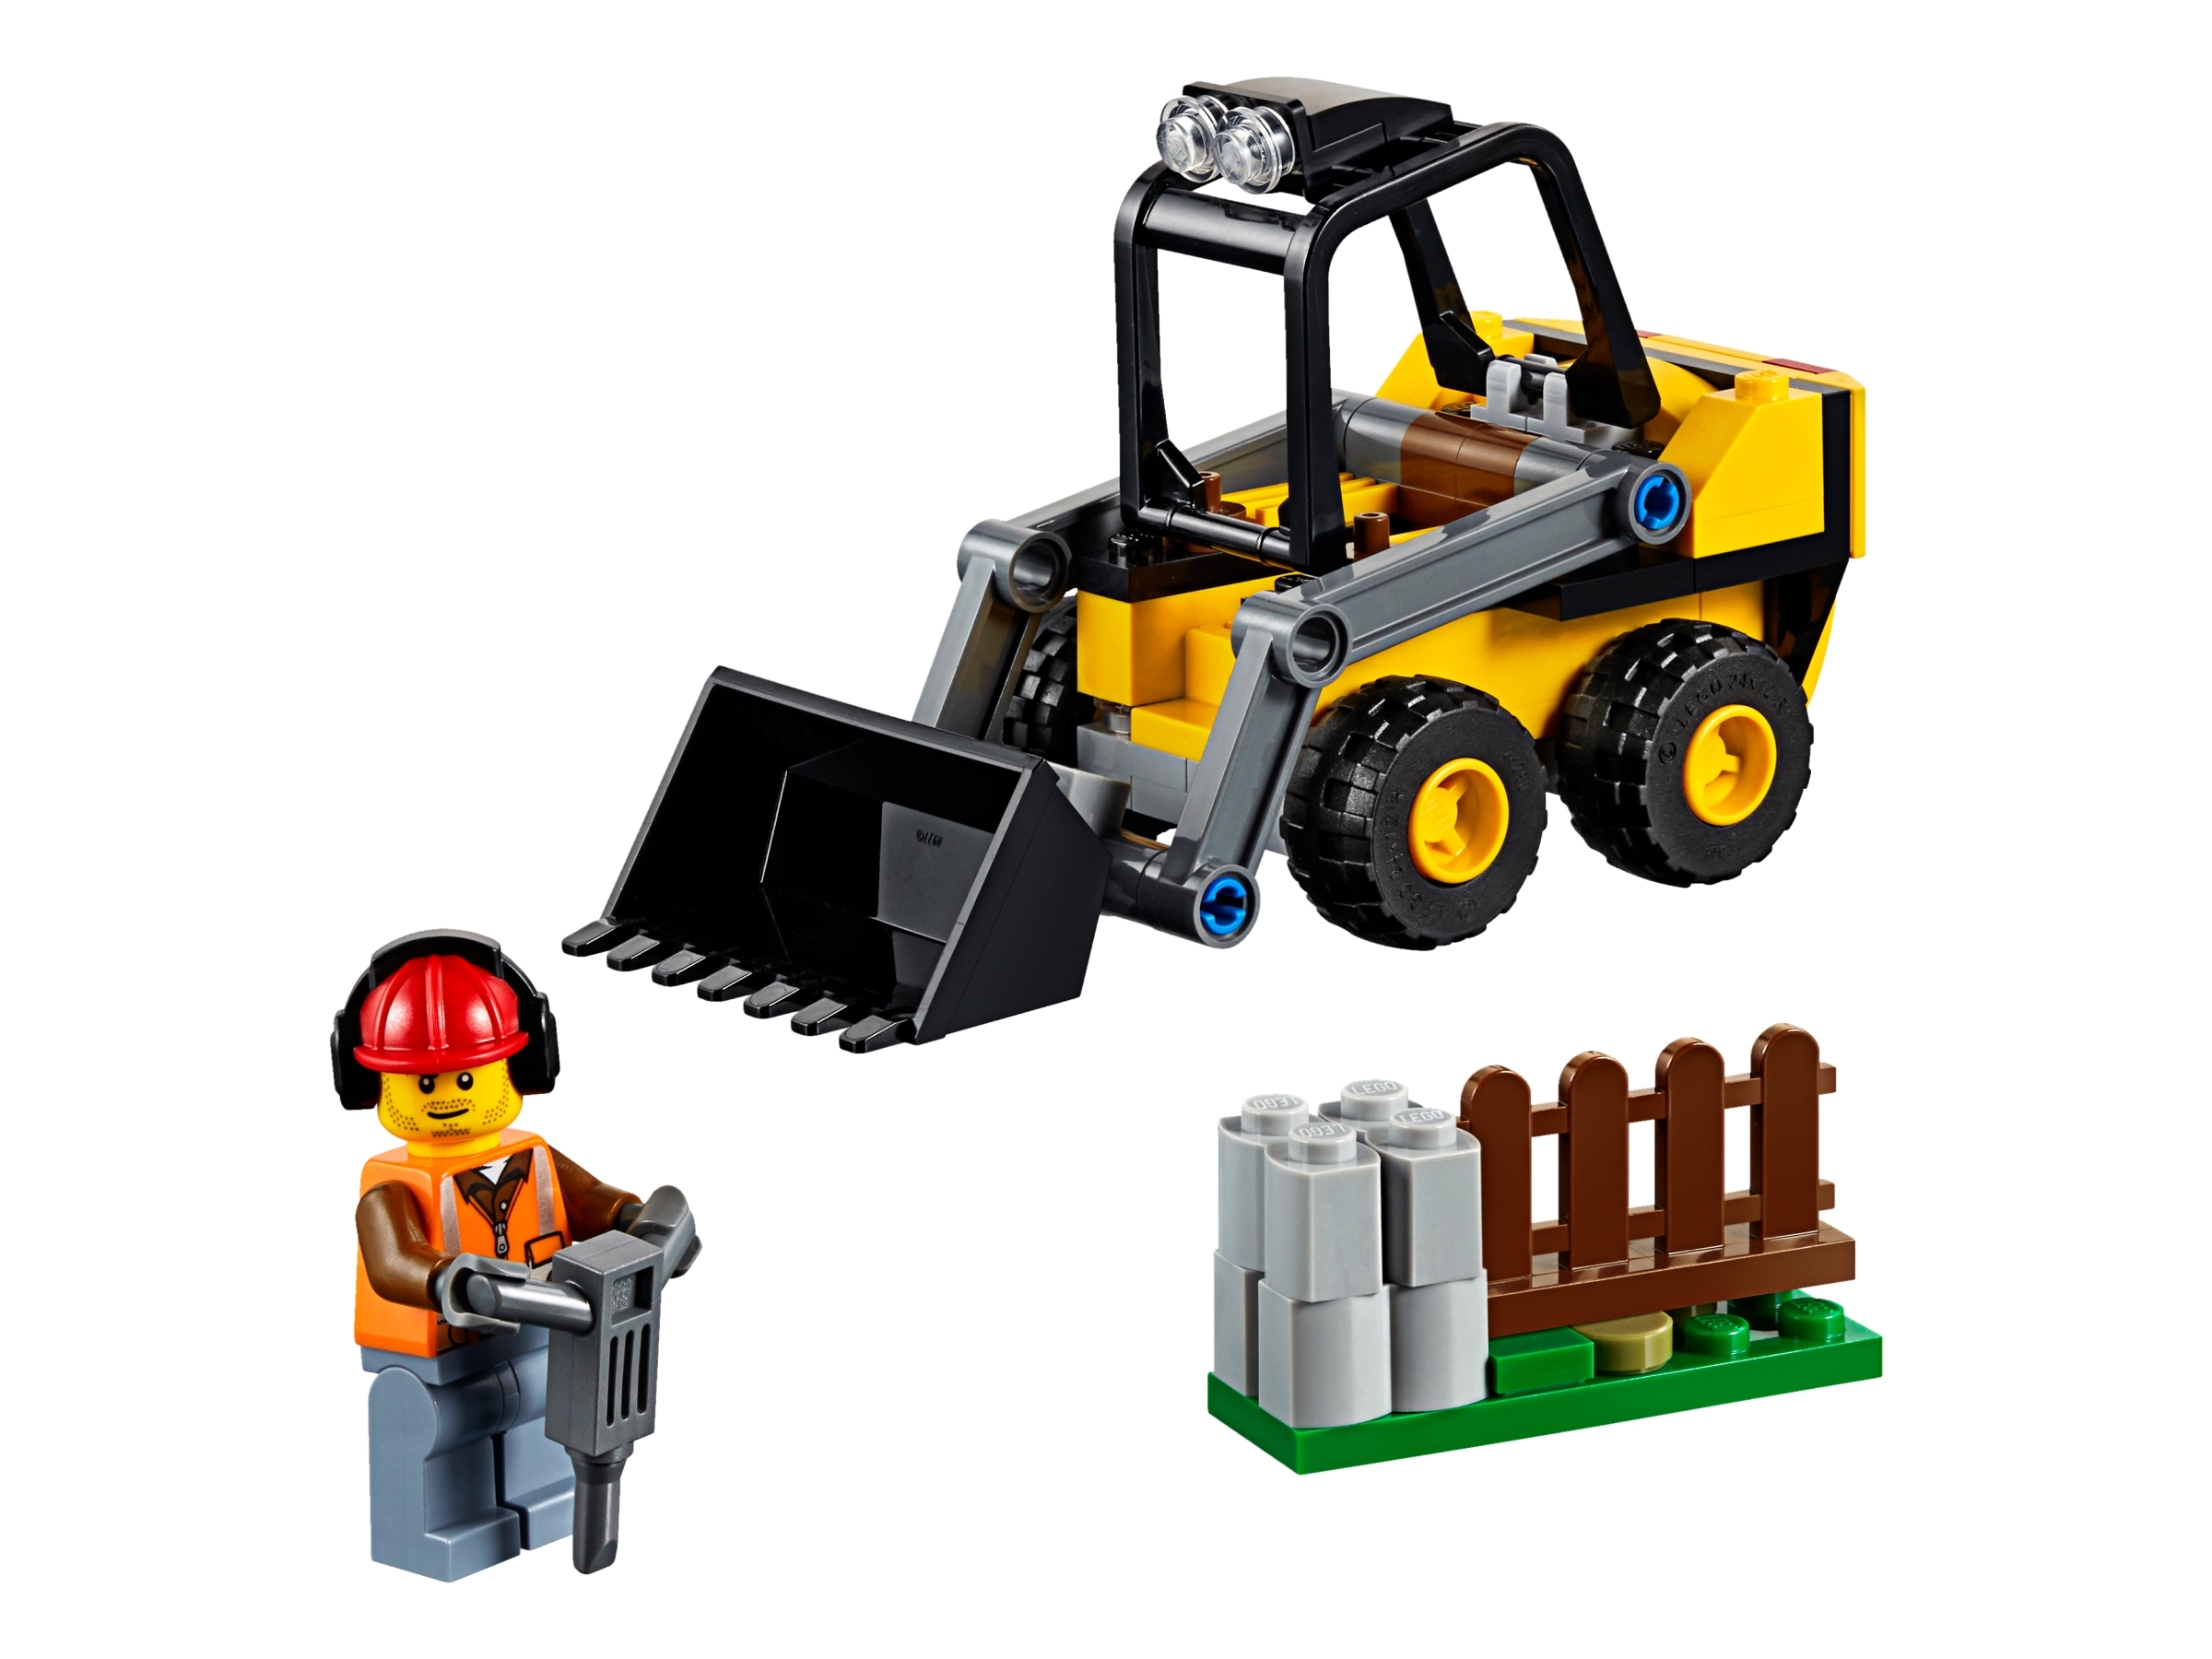 LEGO City 60219 Construction Loader